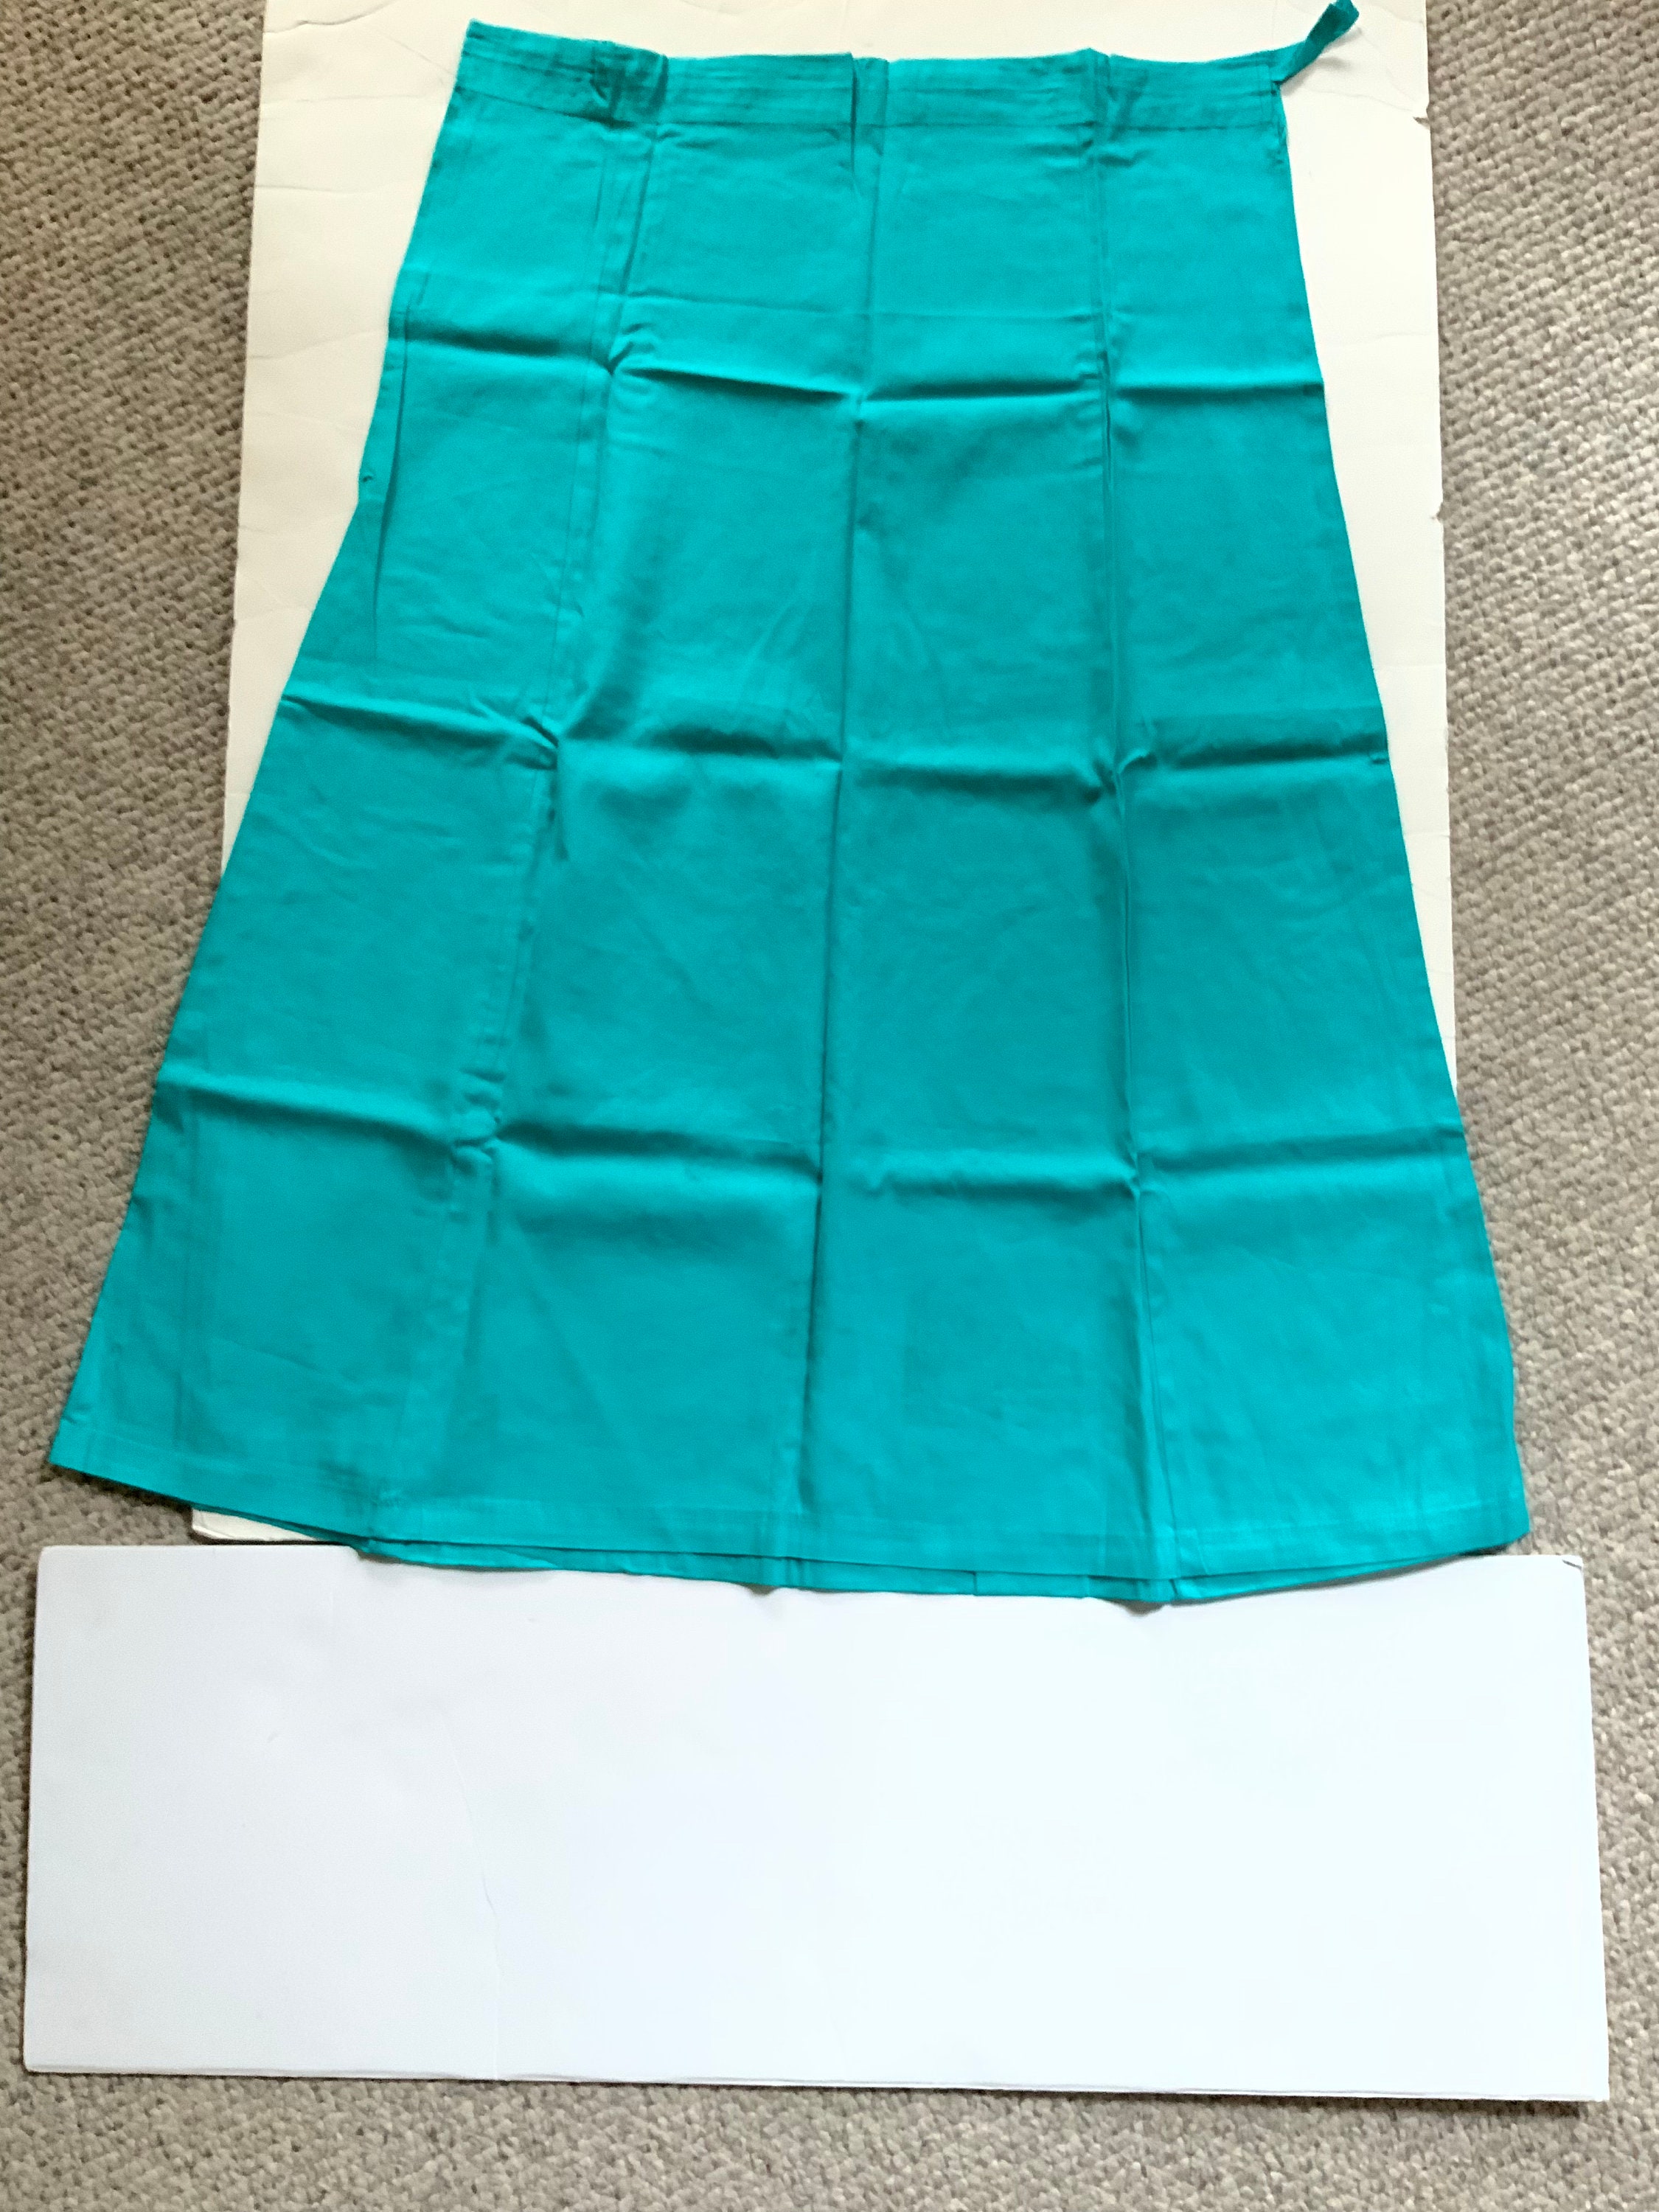 saree petticoat cutting and stitching 